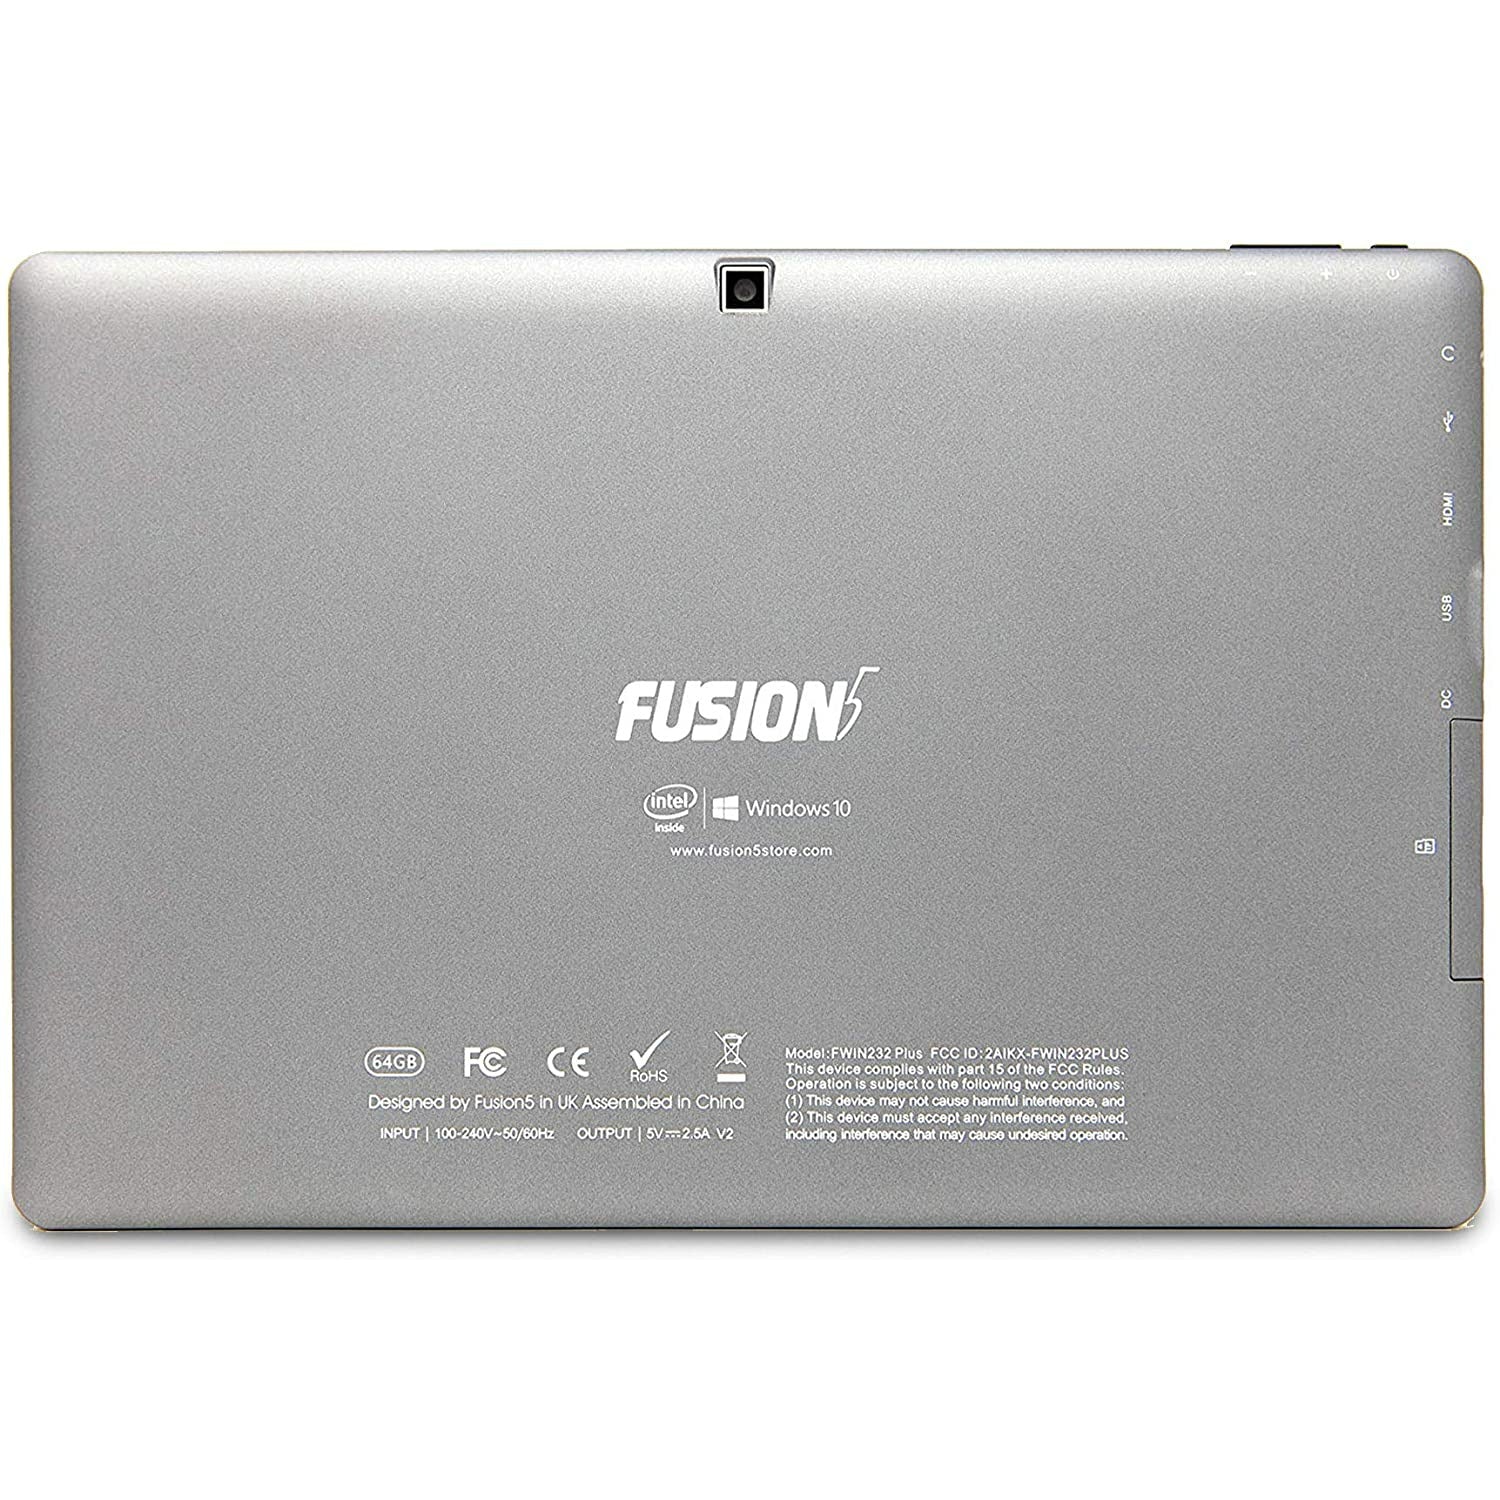 Windows 10 Fusion5 FWIN232 Plus S1 Ultra Slim Windows Tablet PC